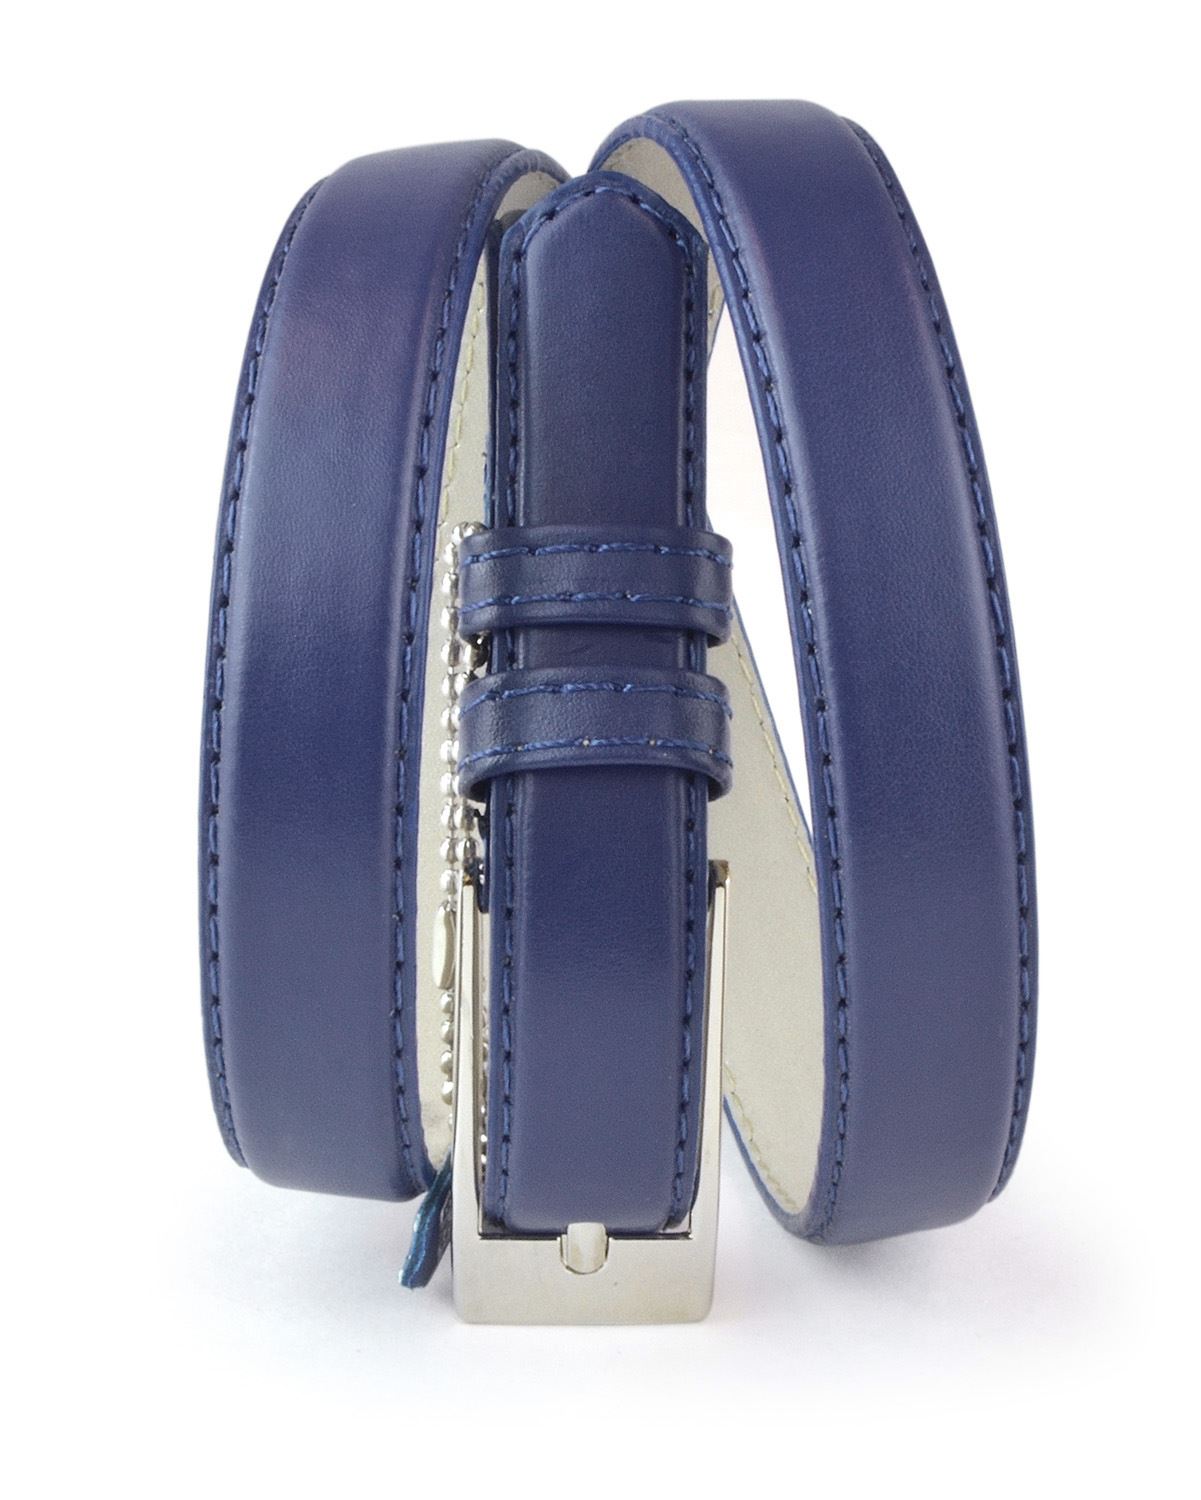 Belle Donne - Women's Solid Color Faux Leather 3/4" Belt - Navy- Large